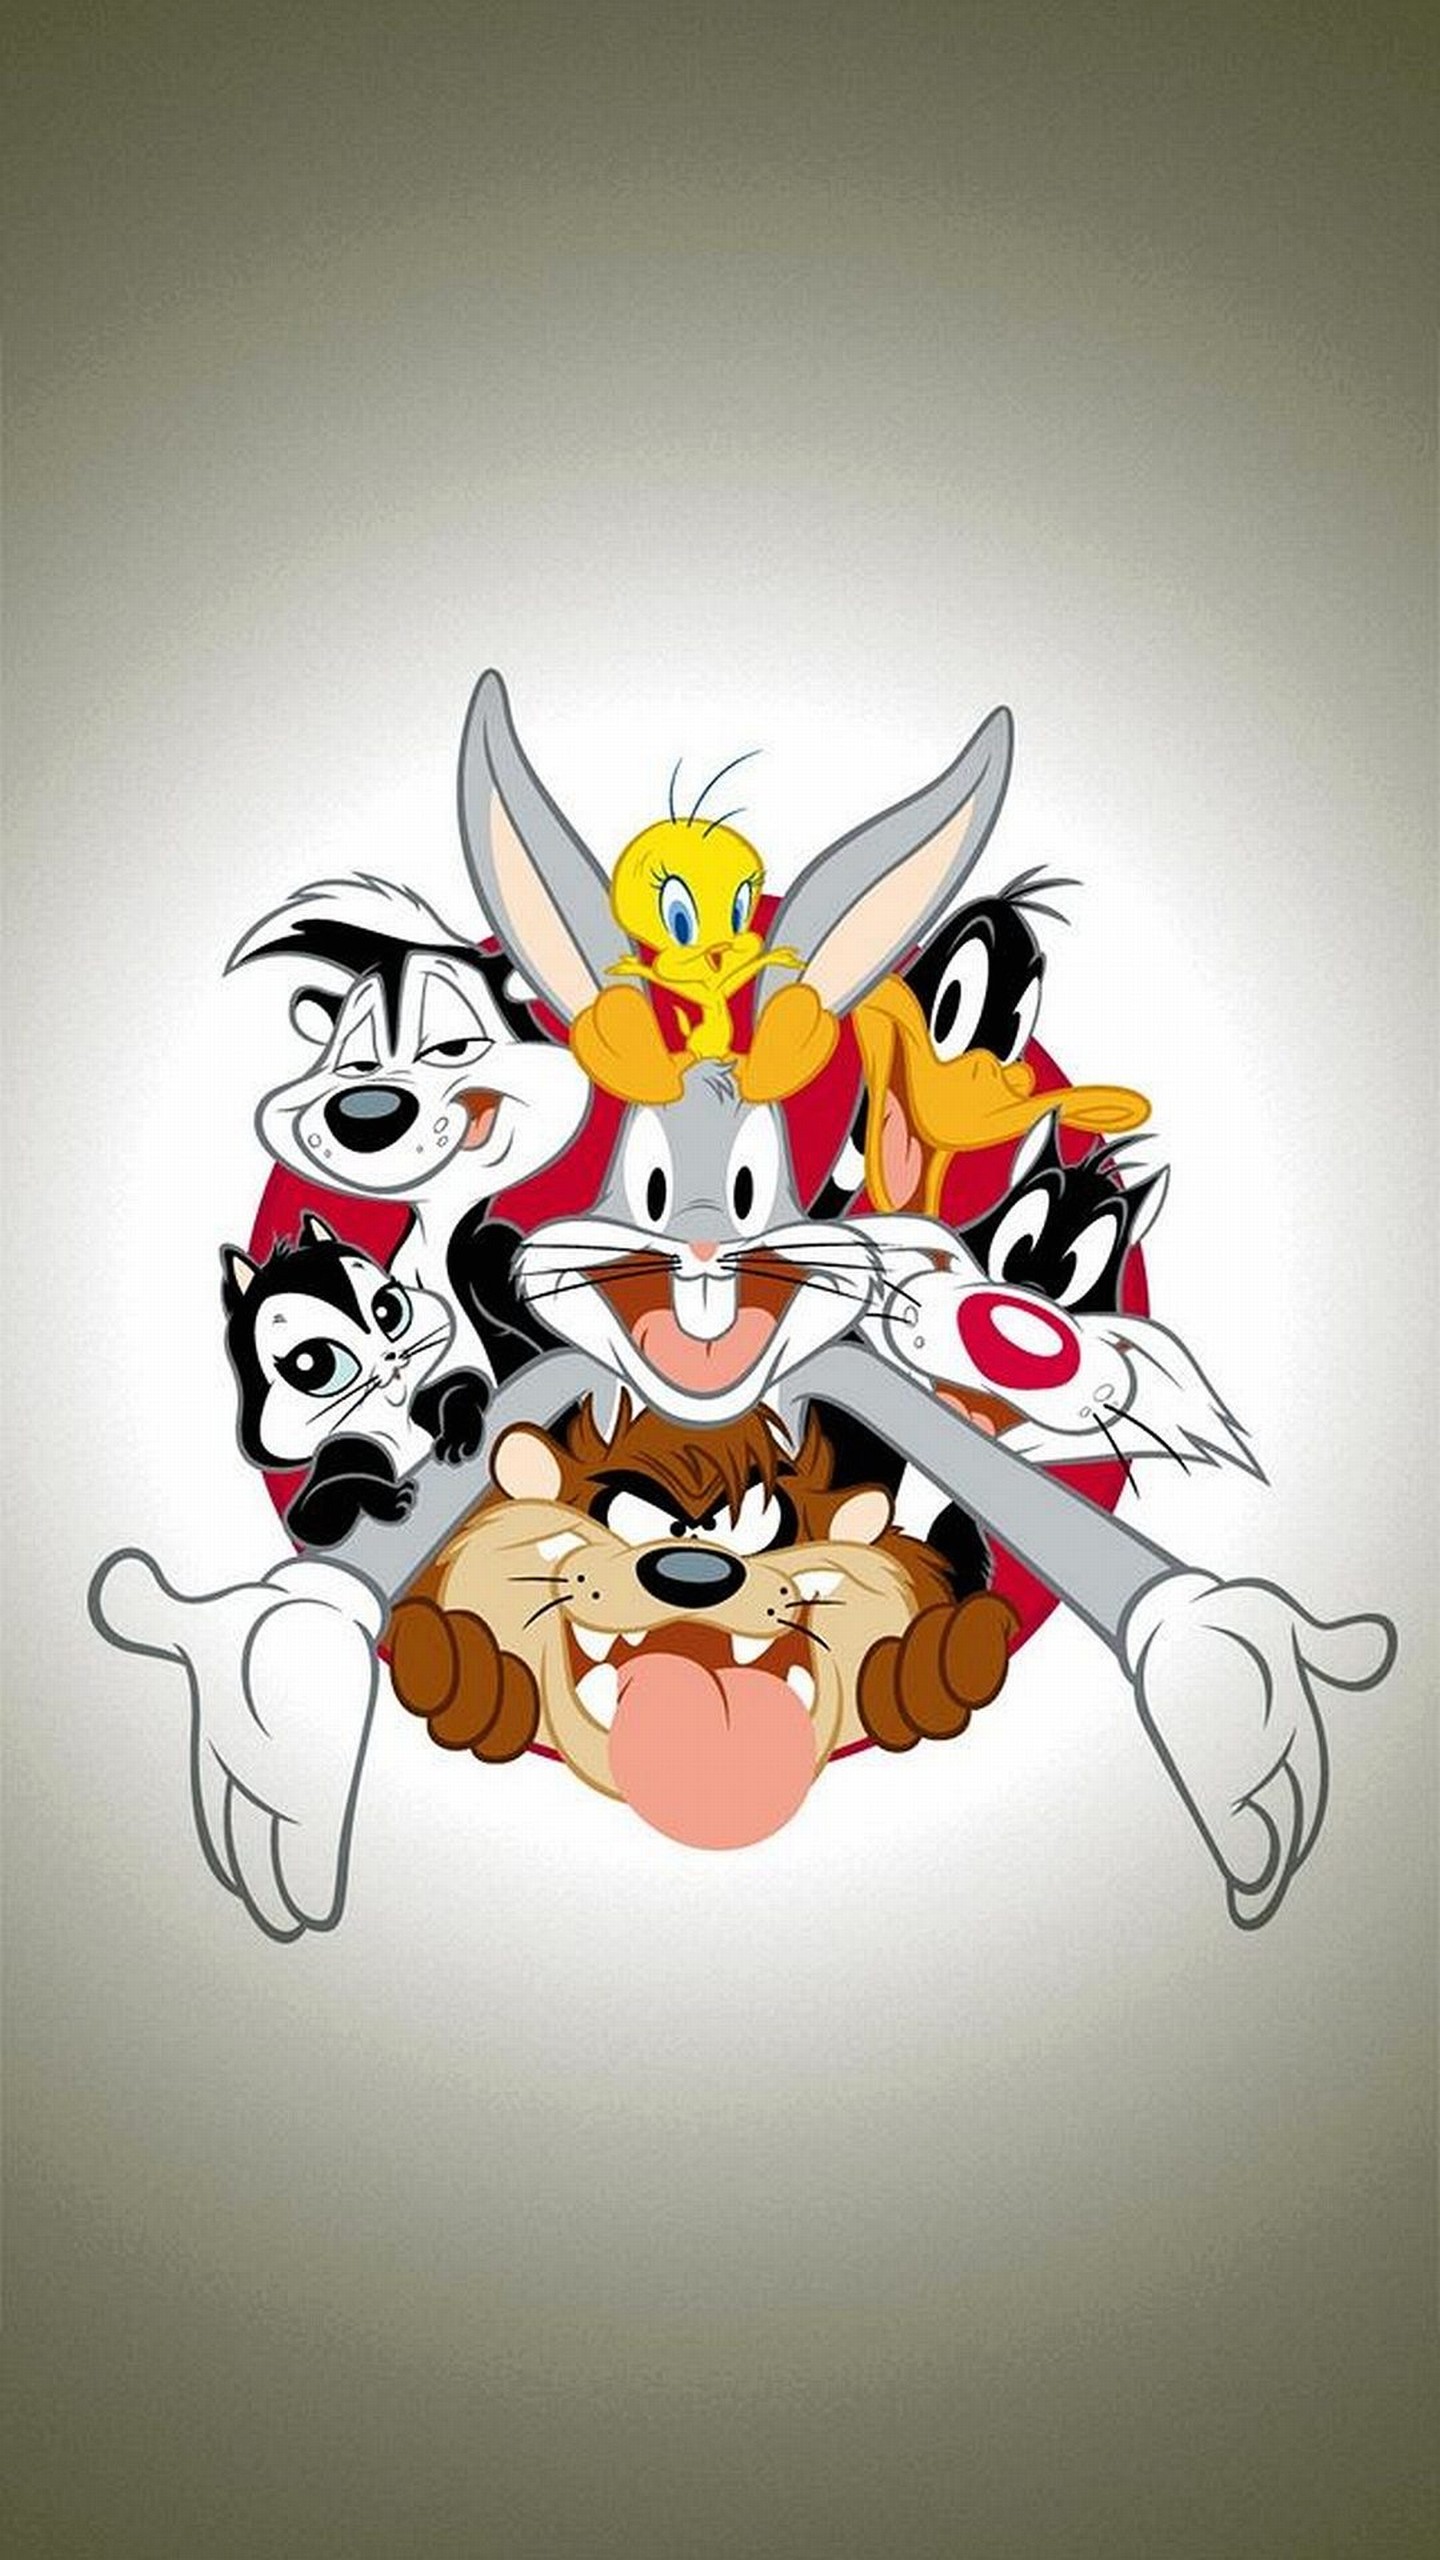 Z Wallpaper Lg G3 Looney Tunes 1440 2560 310 - 1440 x 2560 - Lg G3 ...